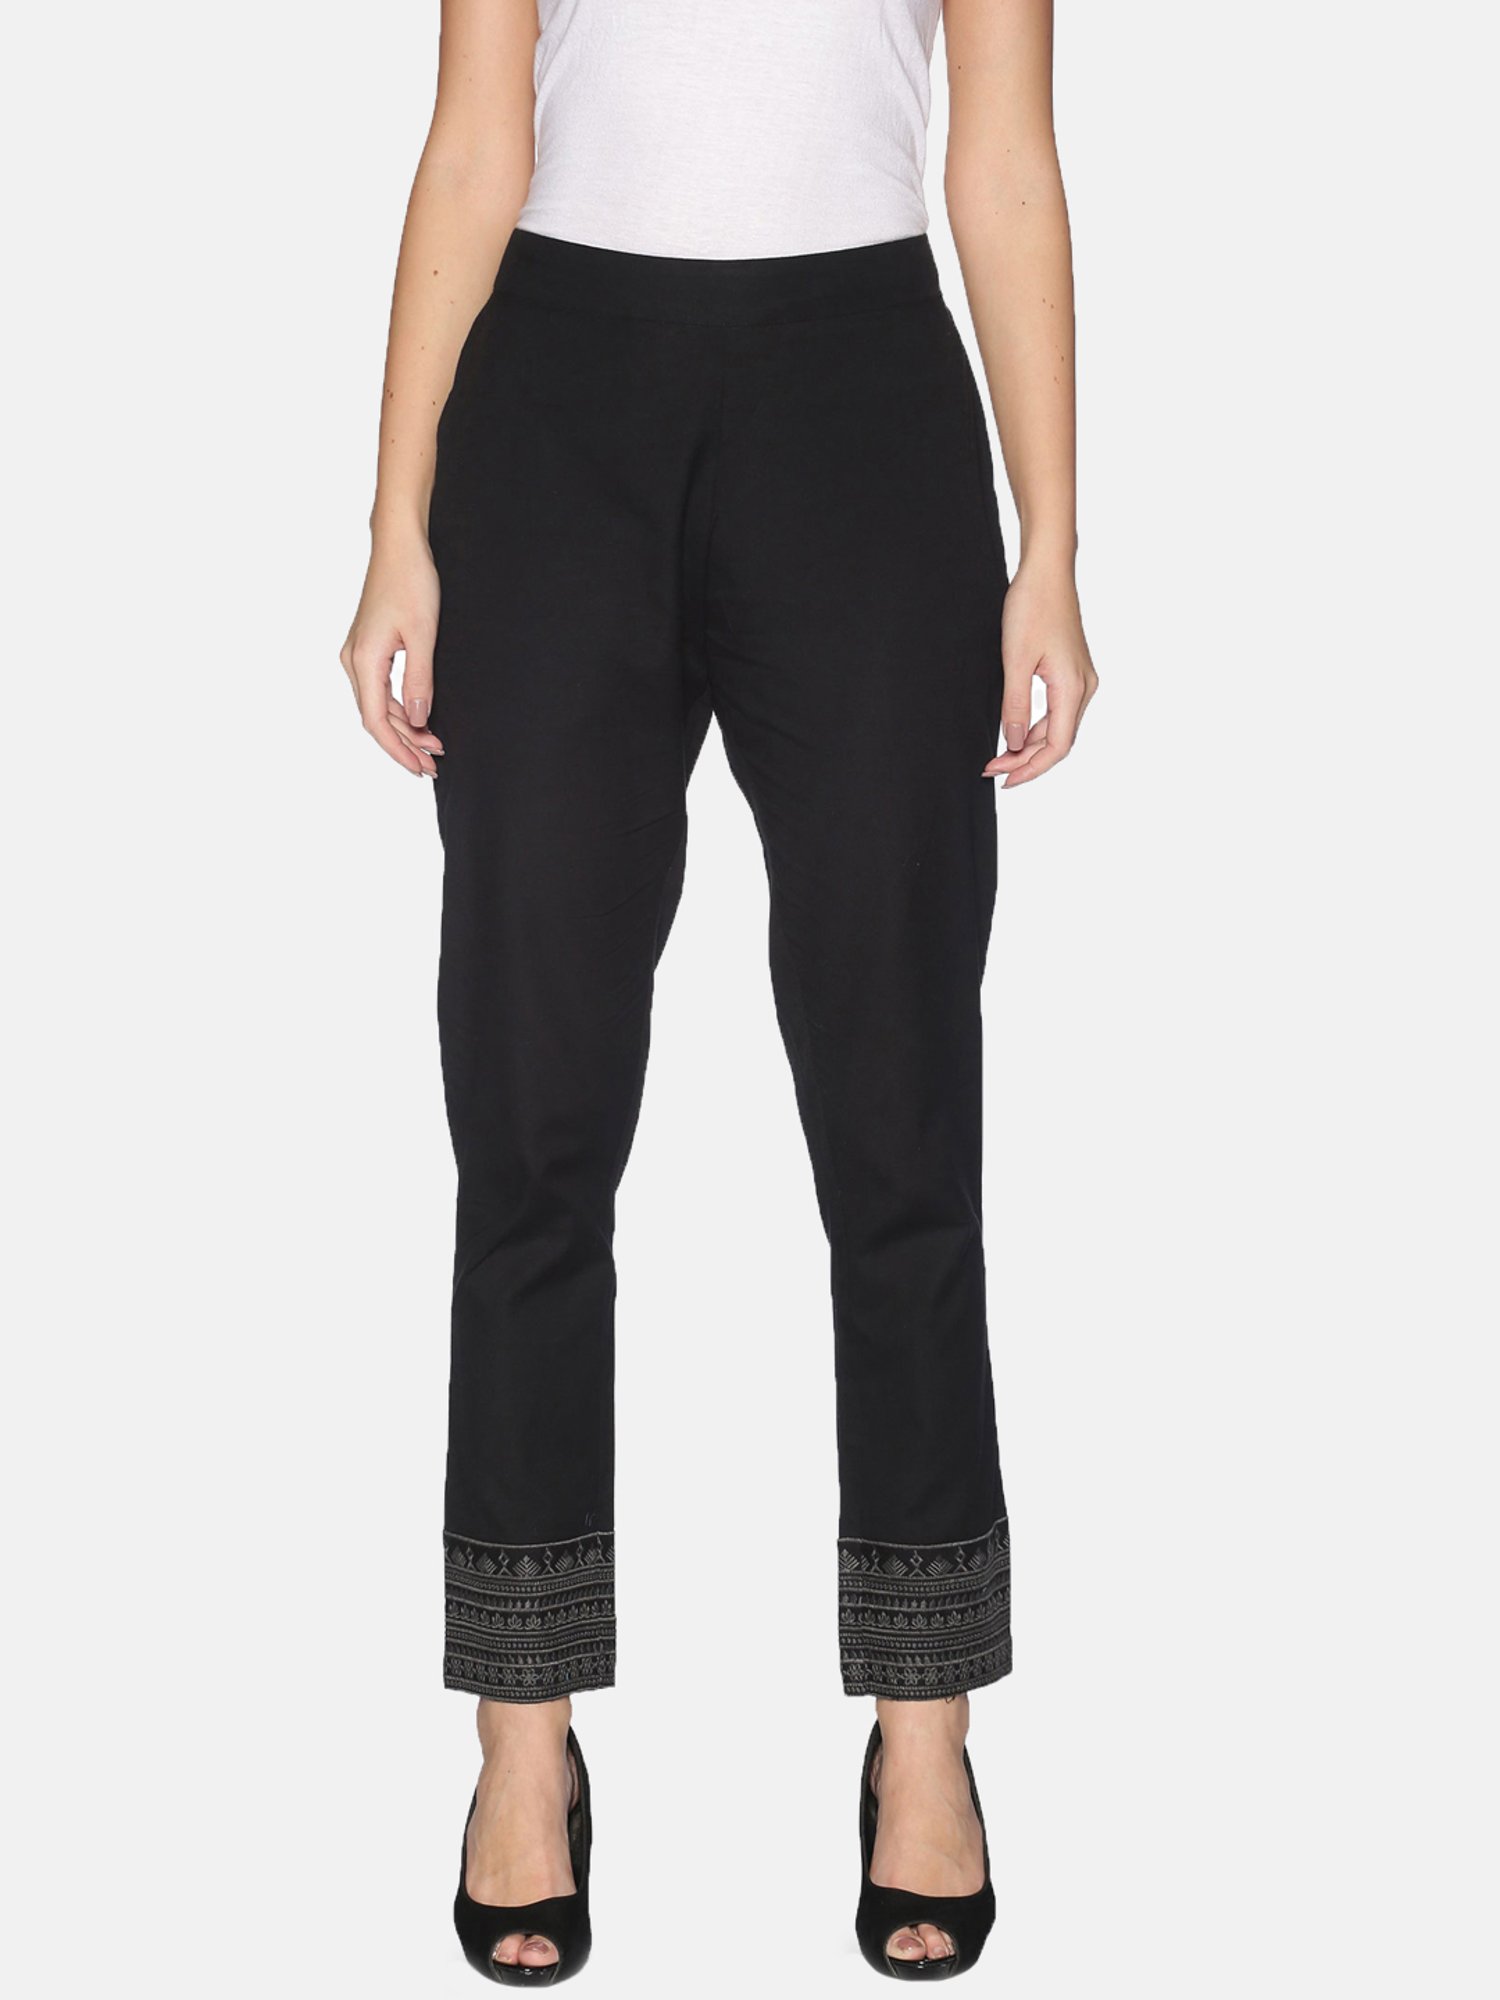 Elegant Black Denim Boot Cut Jeans For Women